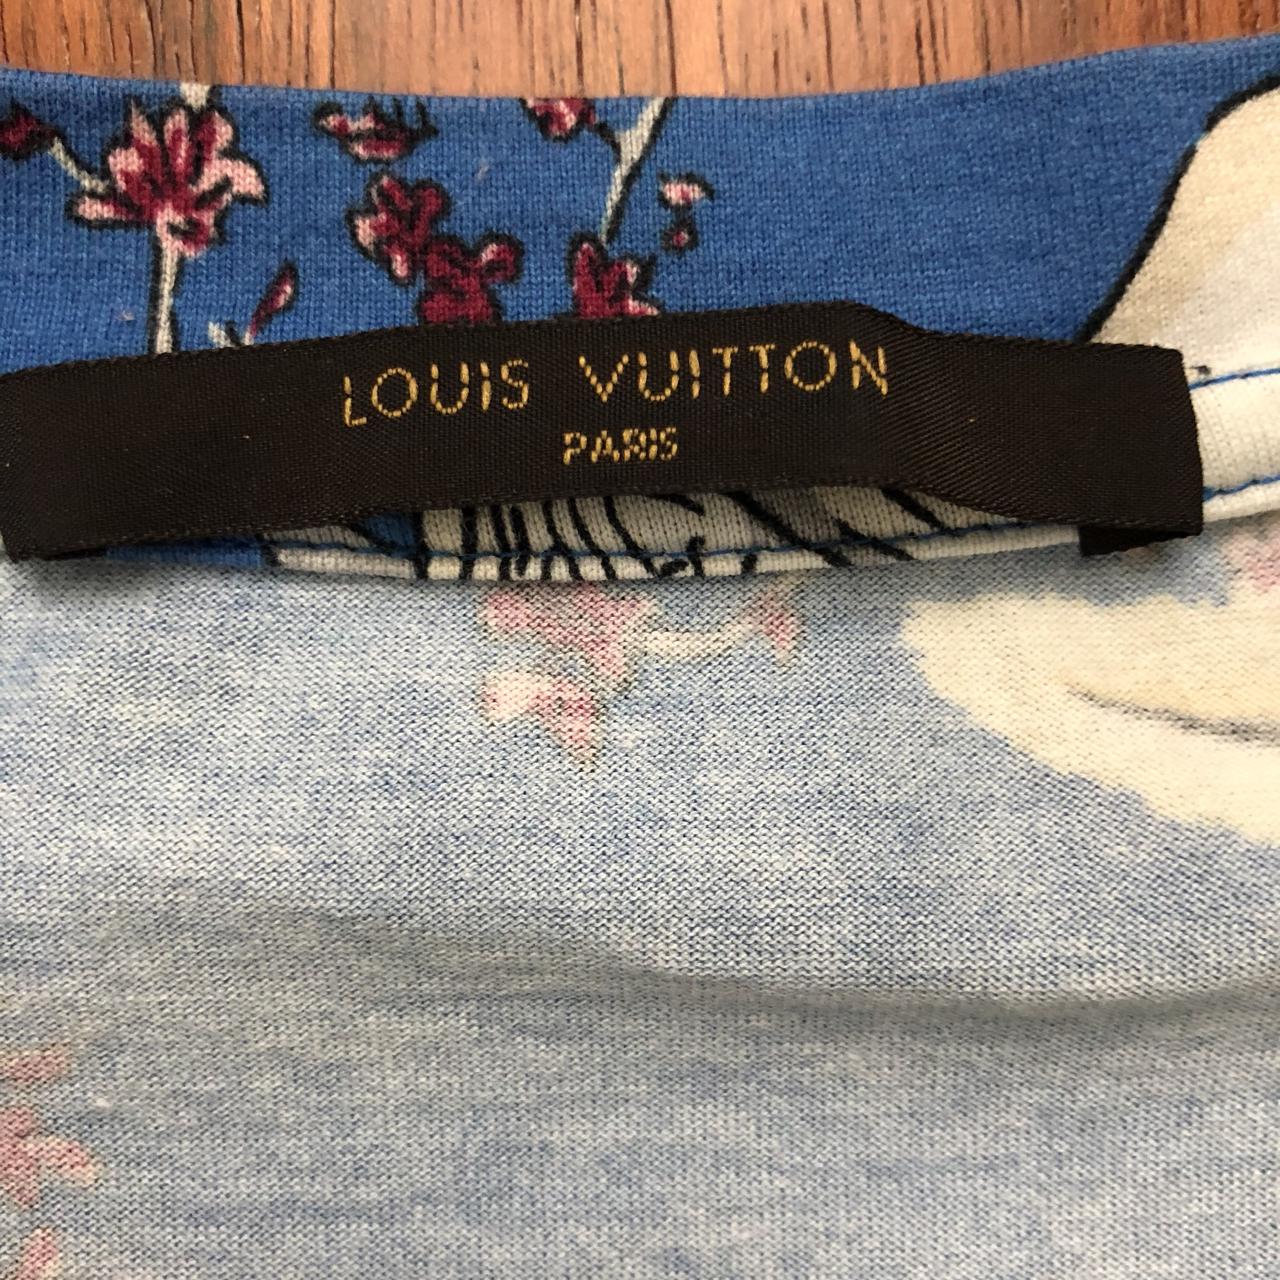 Authentic Louis Vuitton Men's Shirt In great - Depop